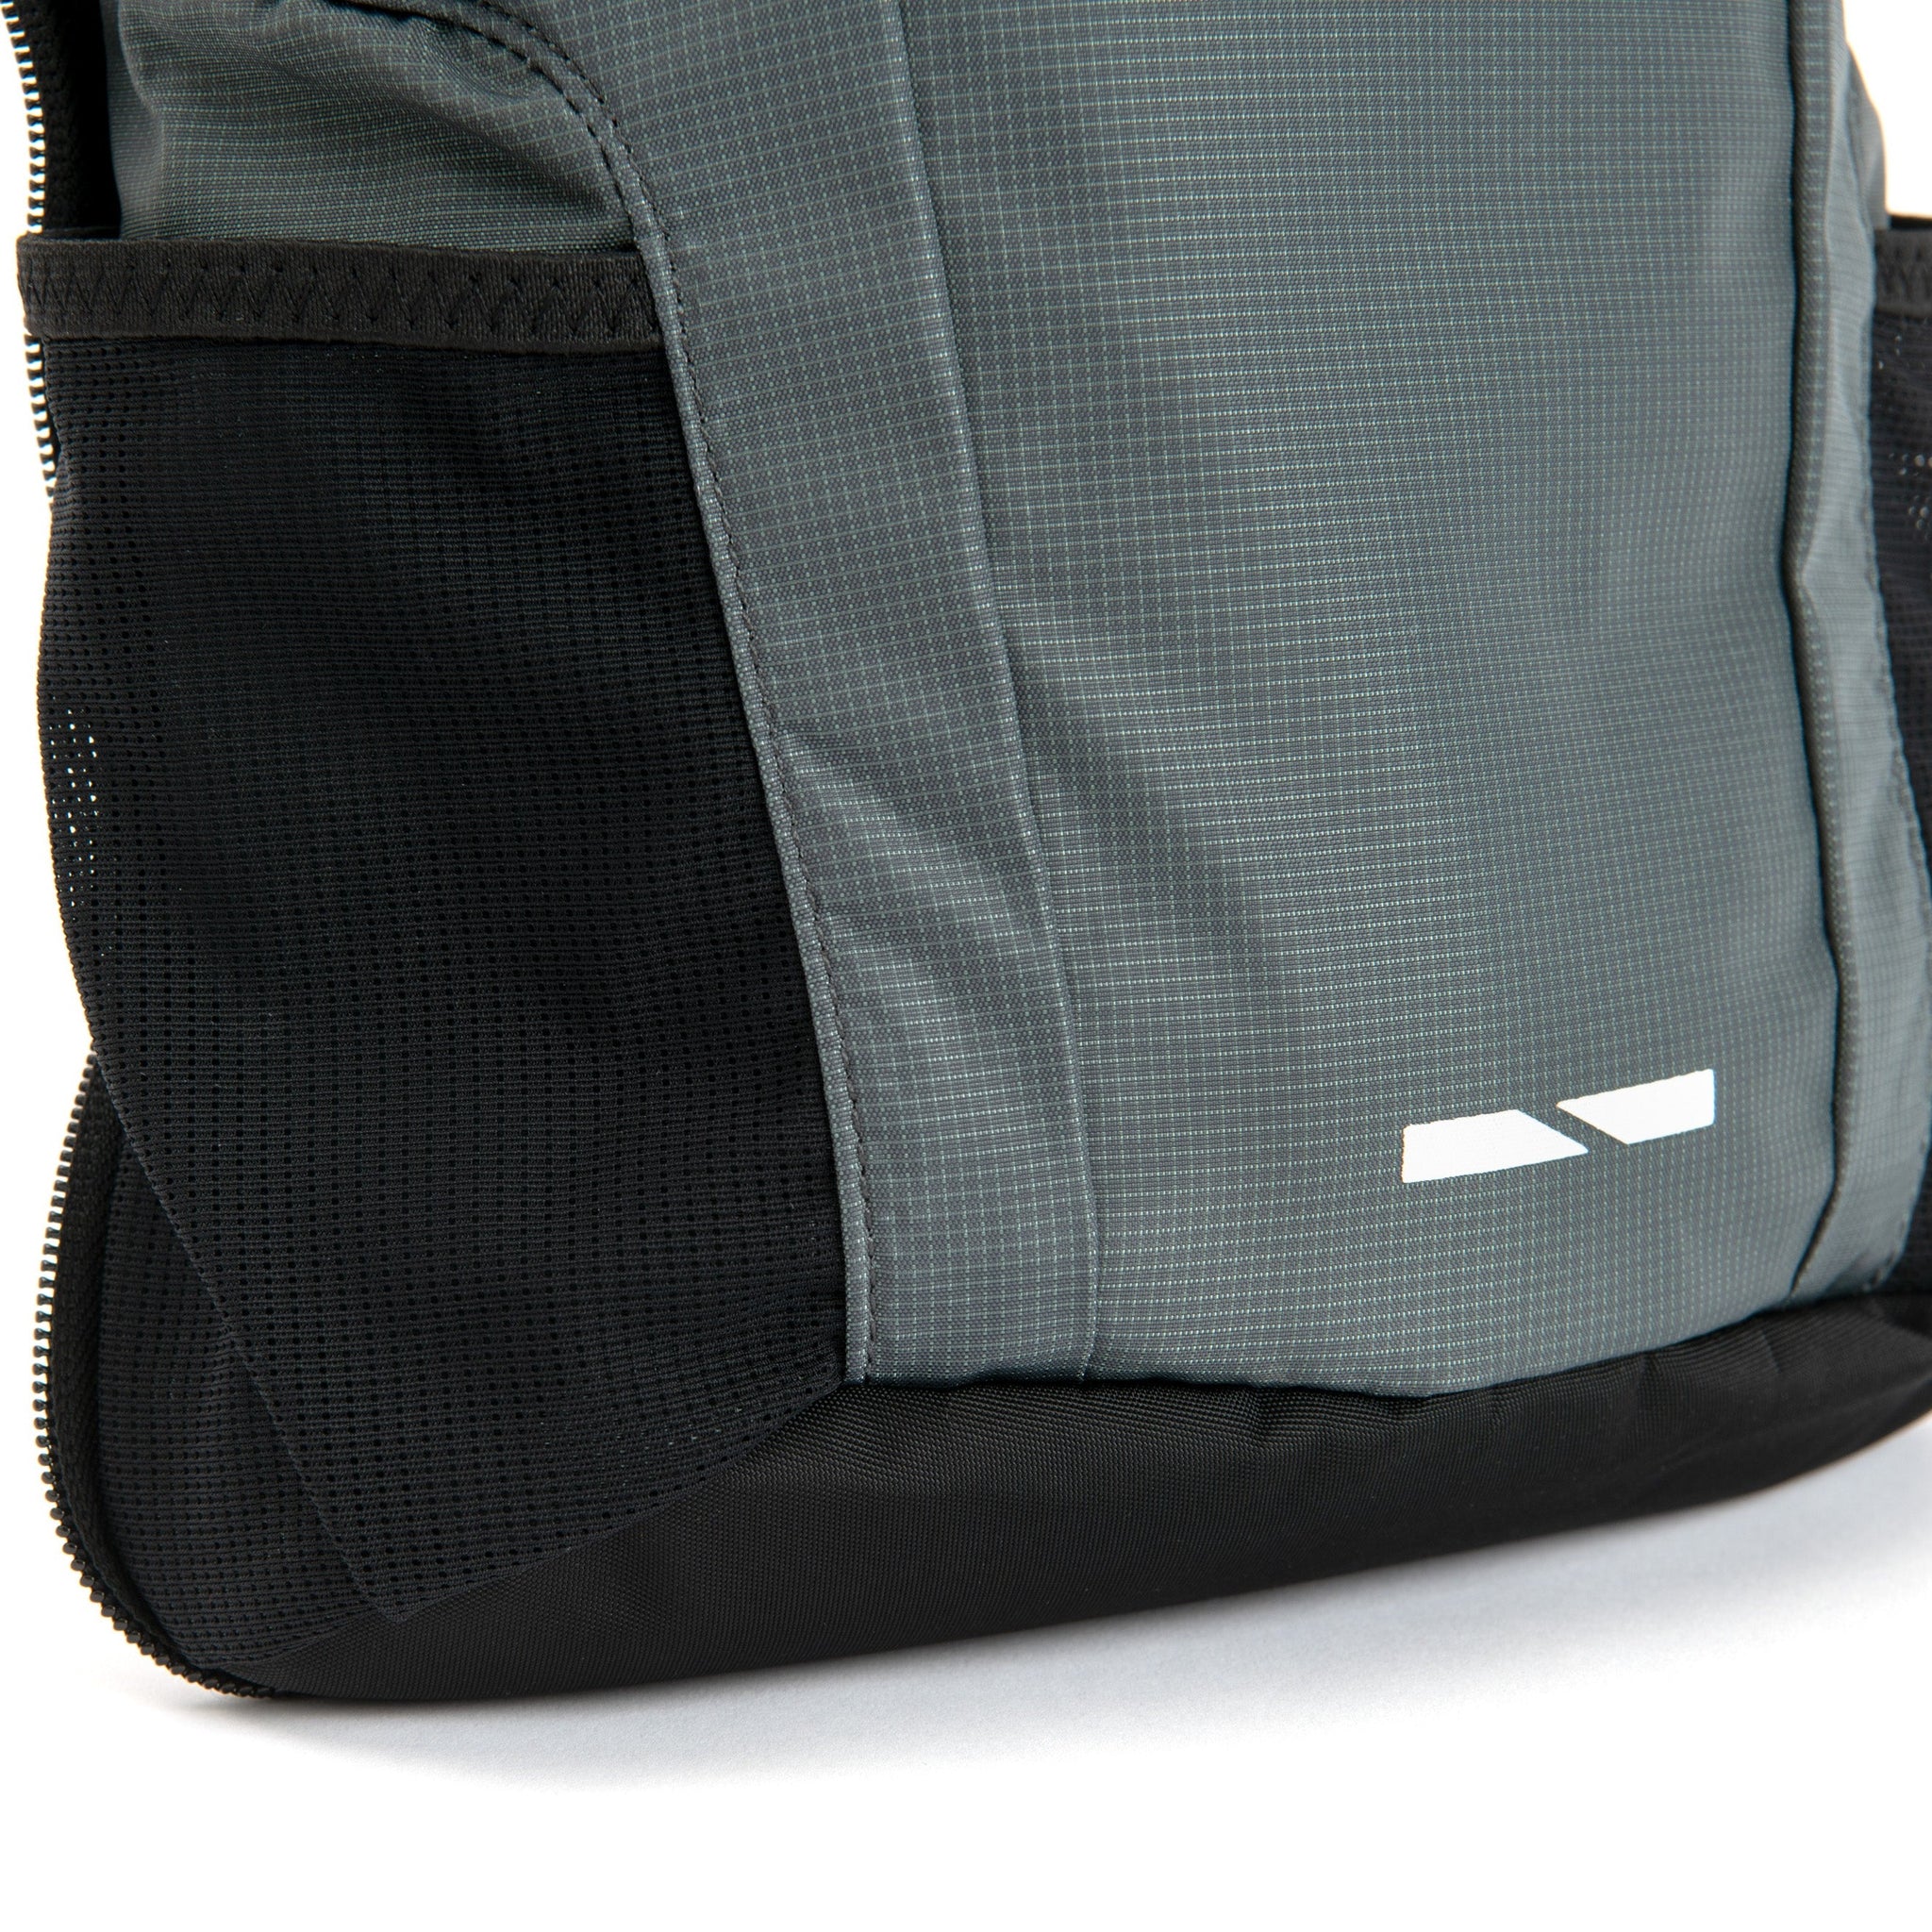 ImpetroGear Modular Backpack - Hike Pack 10L